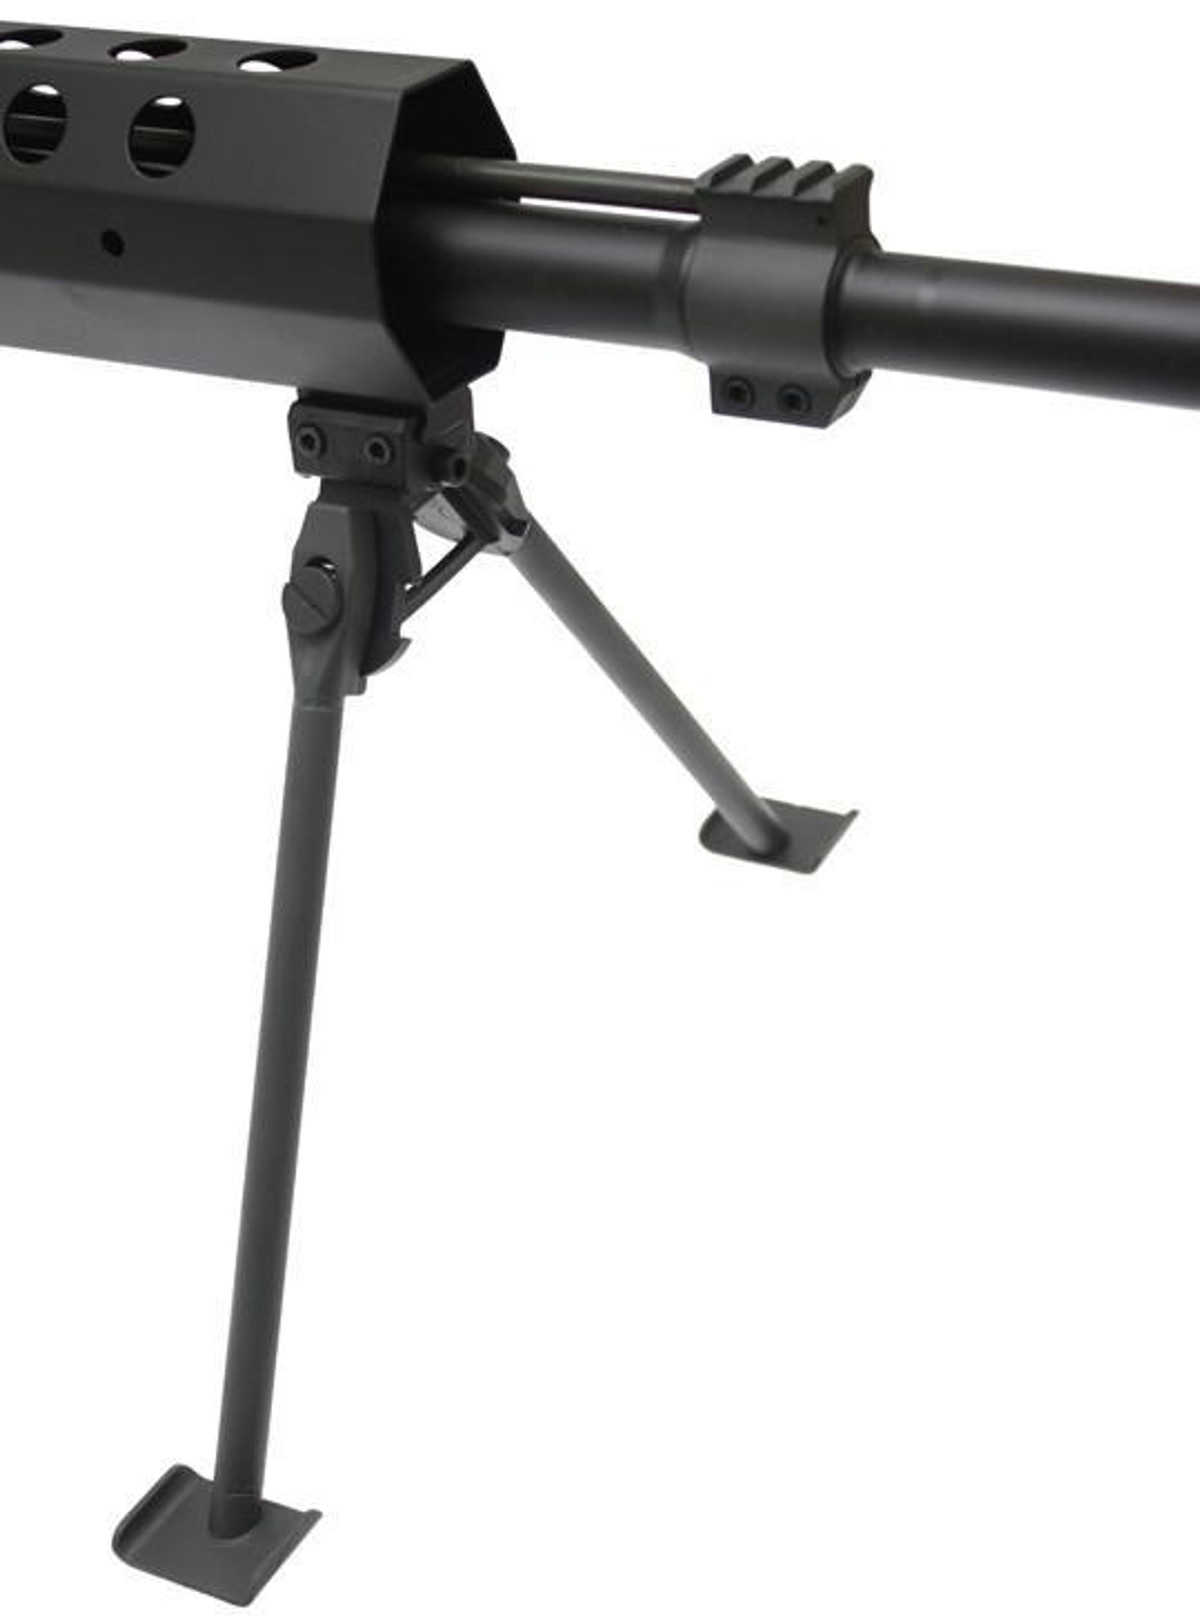 DVIDS - Images - M107 .50 Caliber Sniper Rifle [Image 5 of 14]